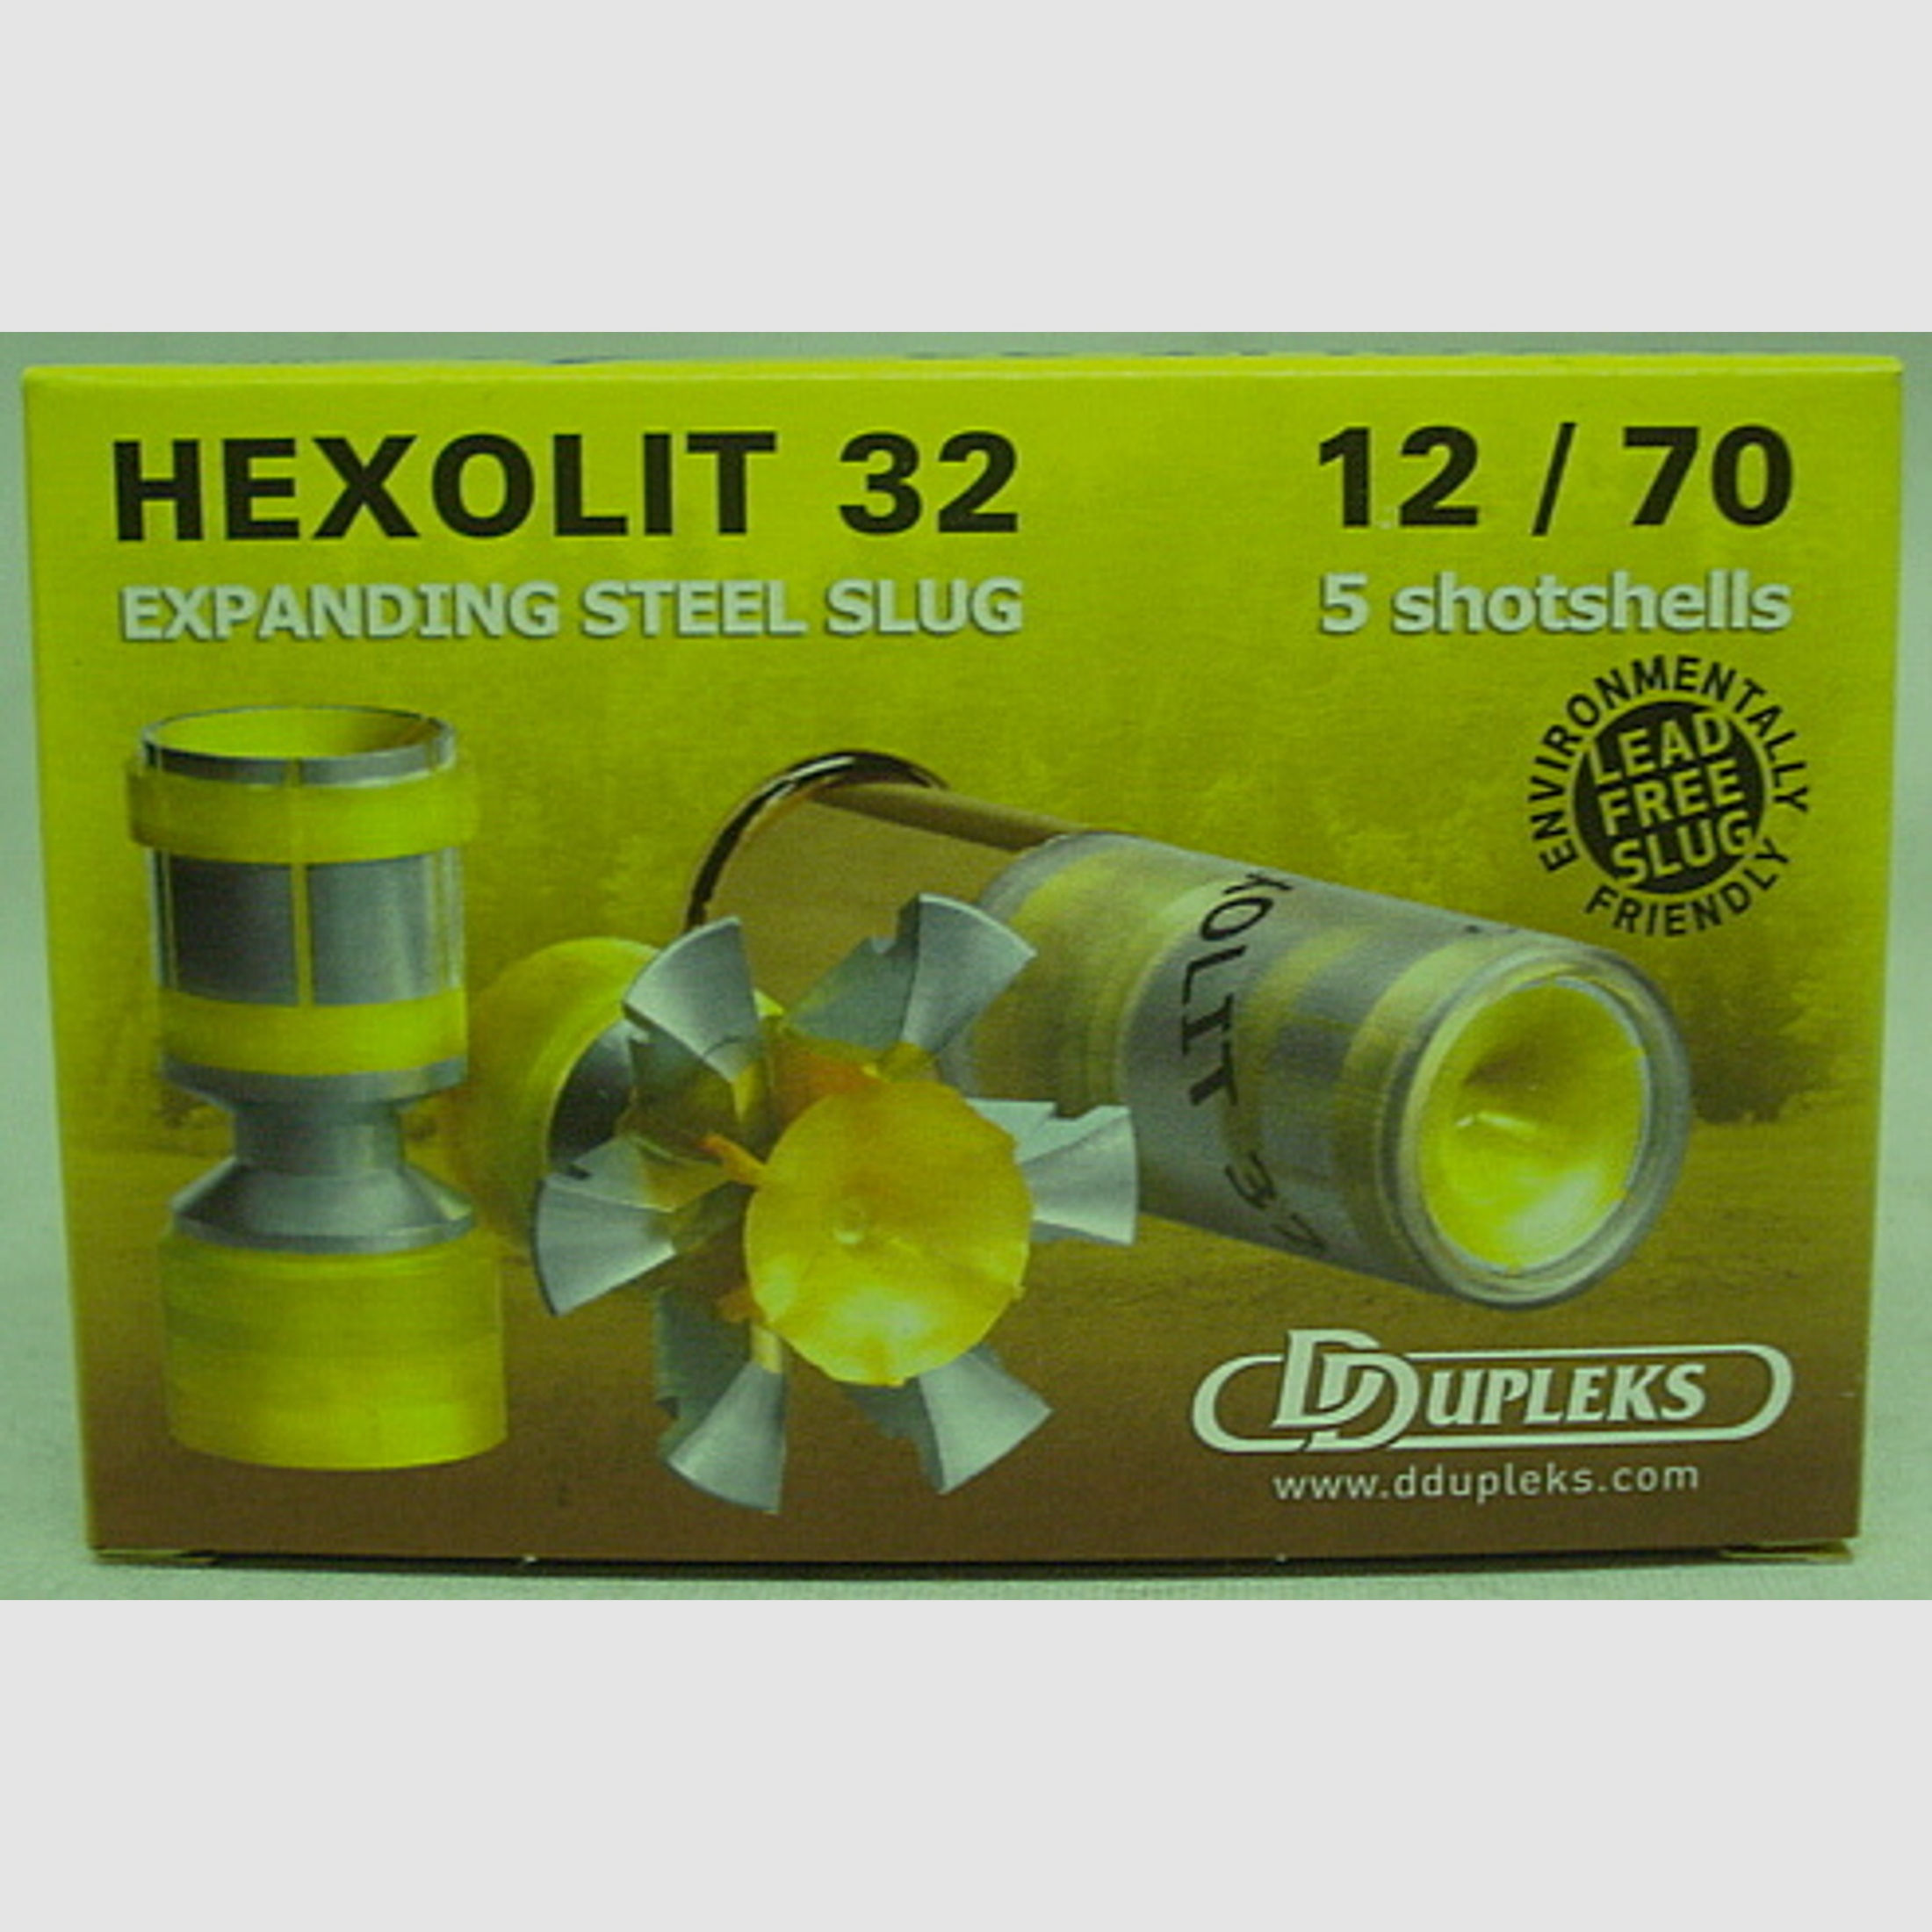 Hexolit 32 12/70 Expans. Slug - bleifrei, 32g/495gr (a5)